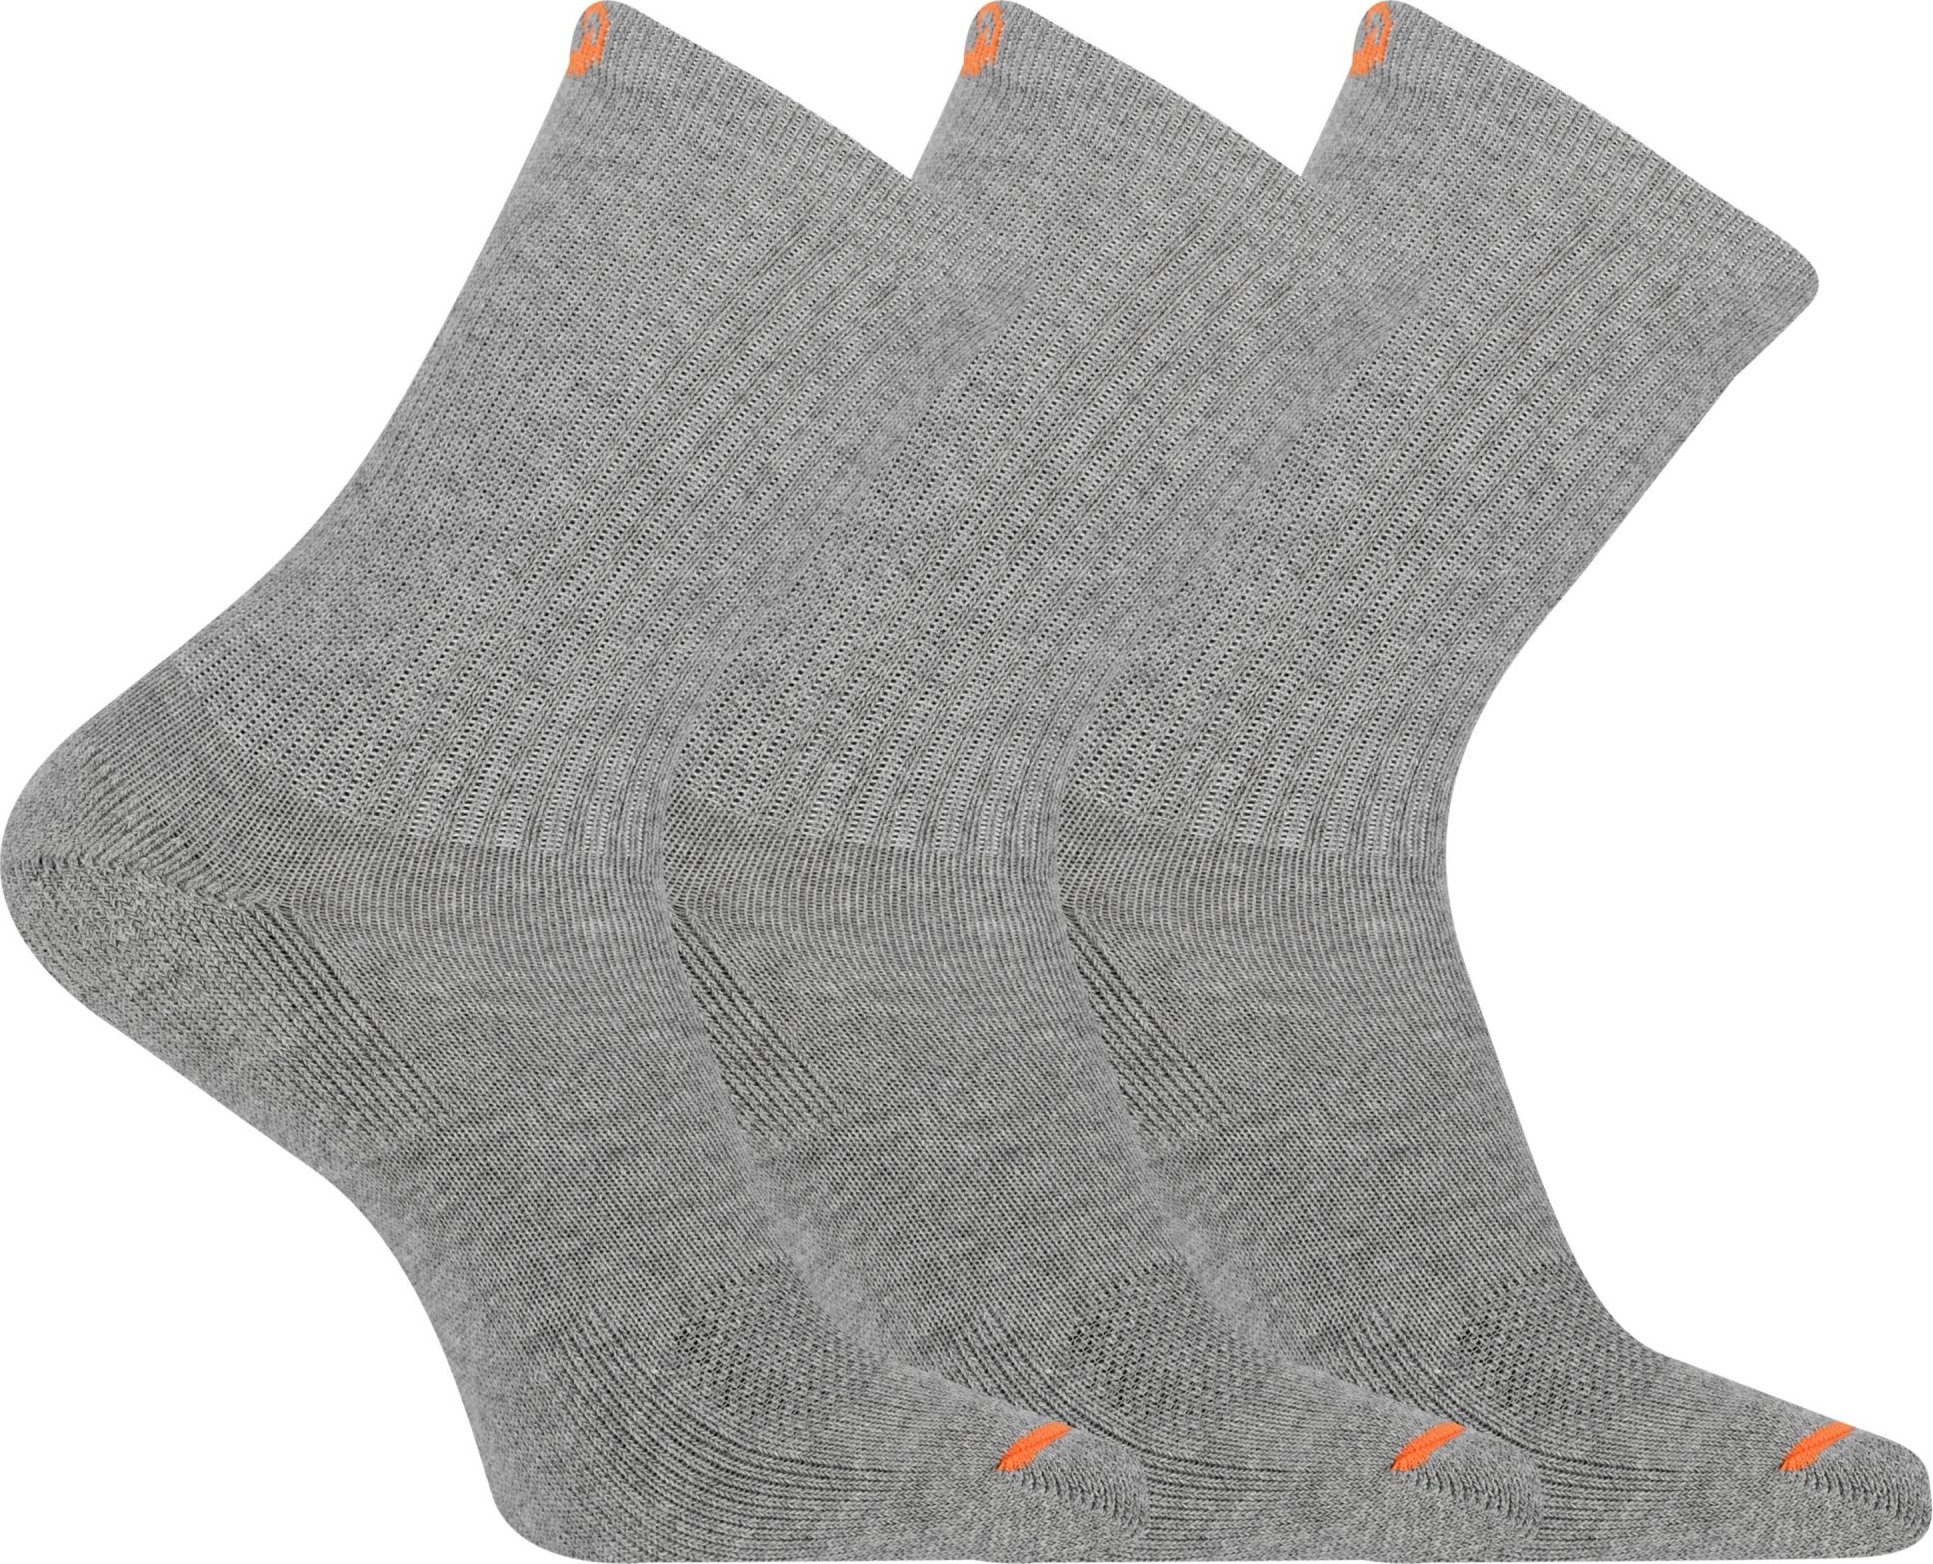 Ponožky MERRELL Cushioned Cotton Quarter (3 pack) Velikost: S/M